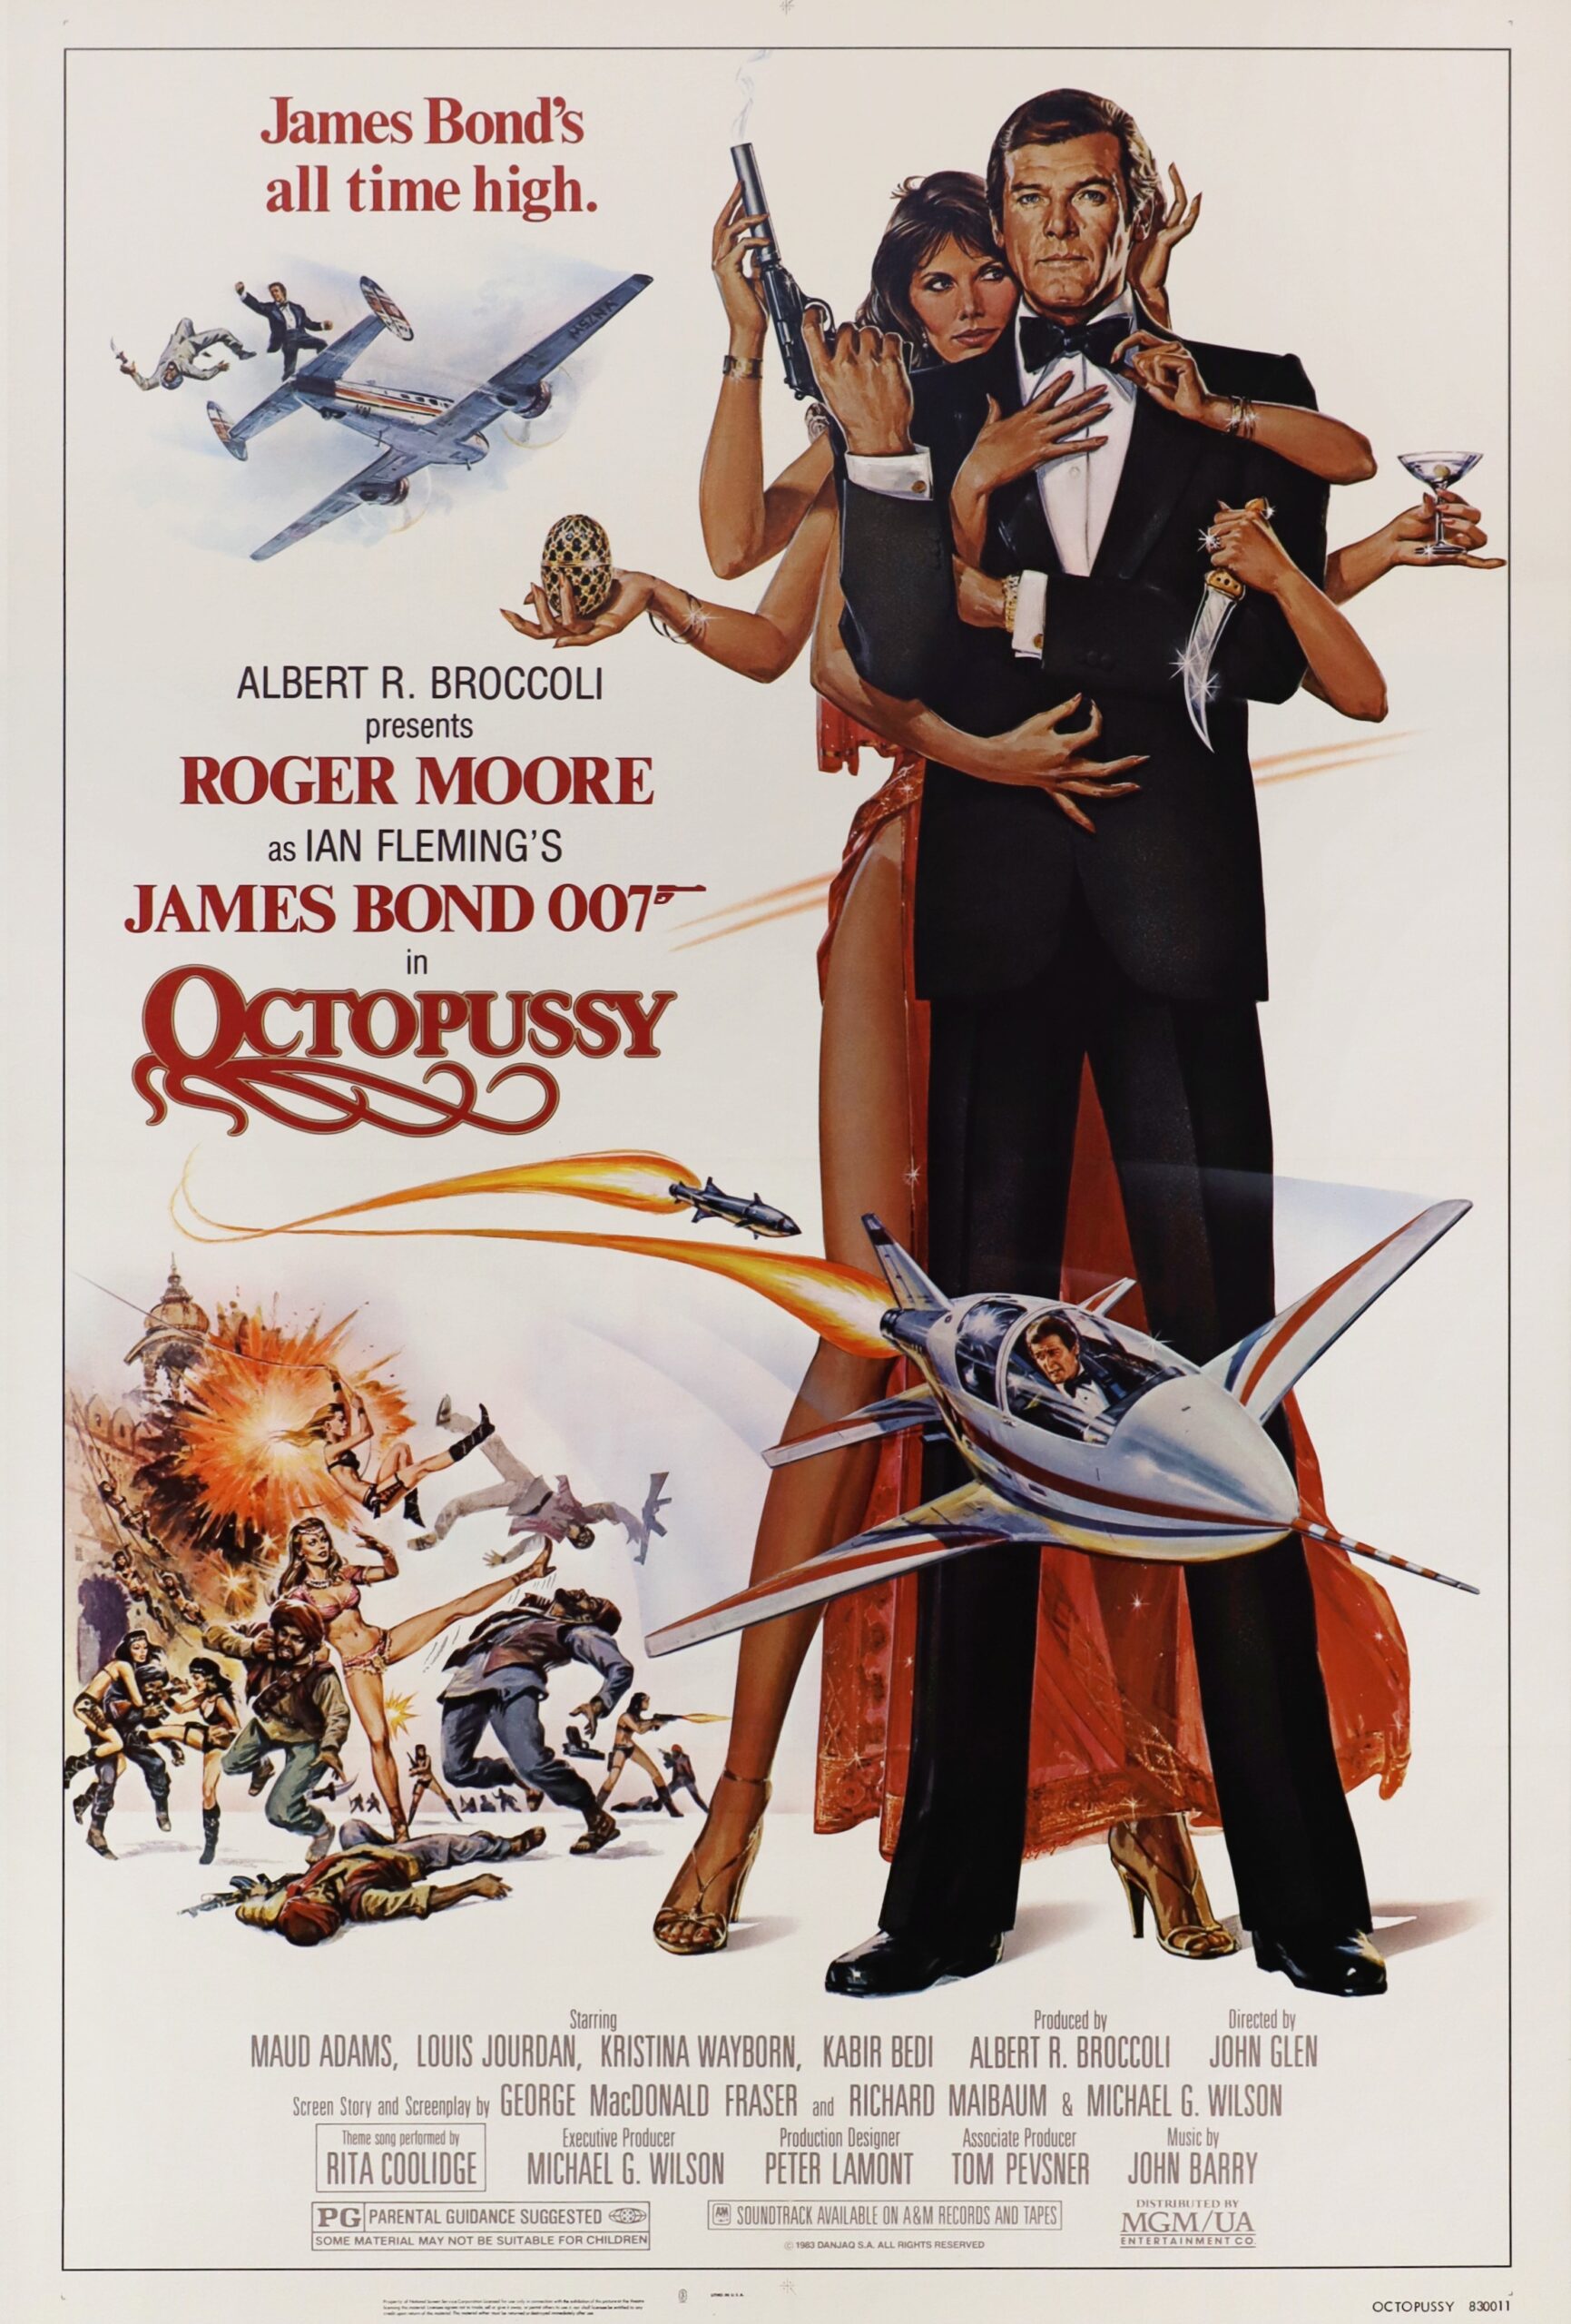 Original vintage cinema movie poster for James Bond 007 adventure, Octopussy